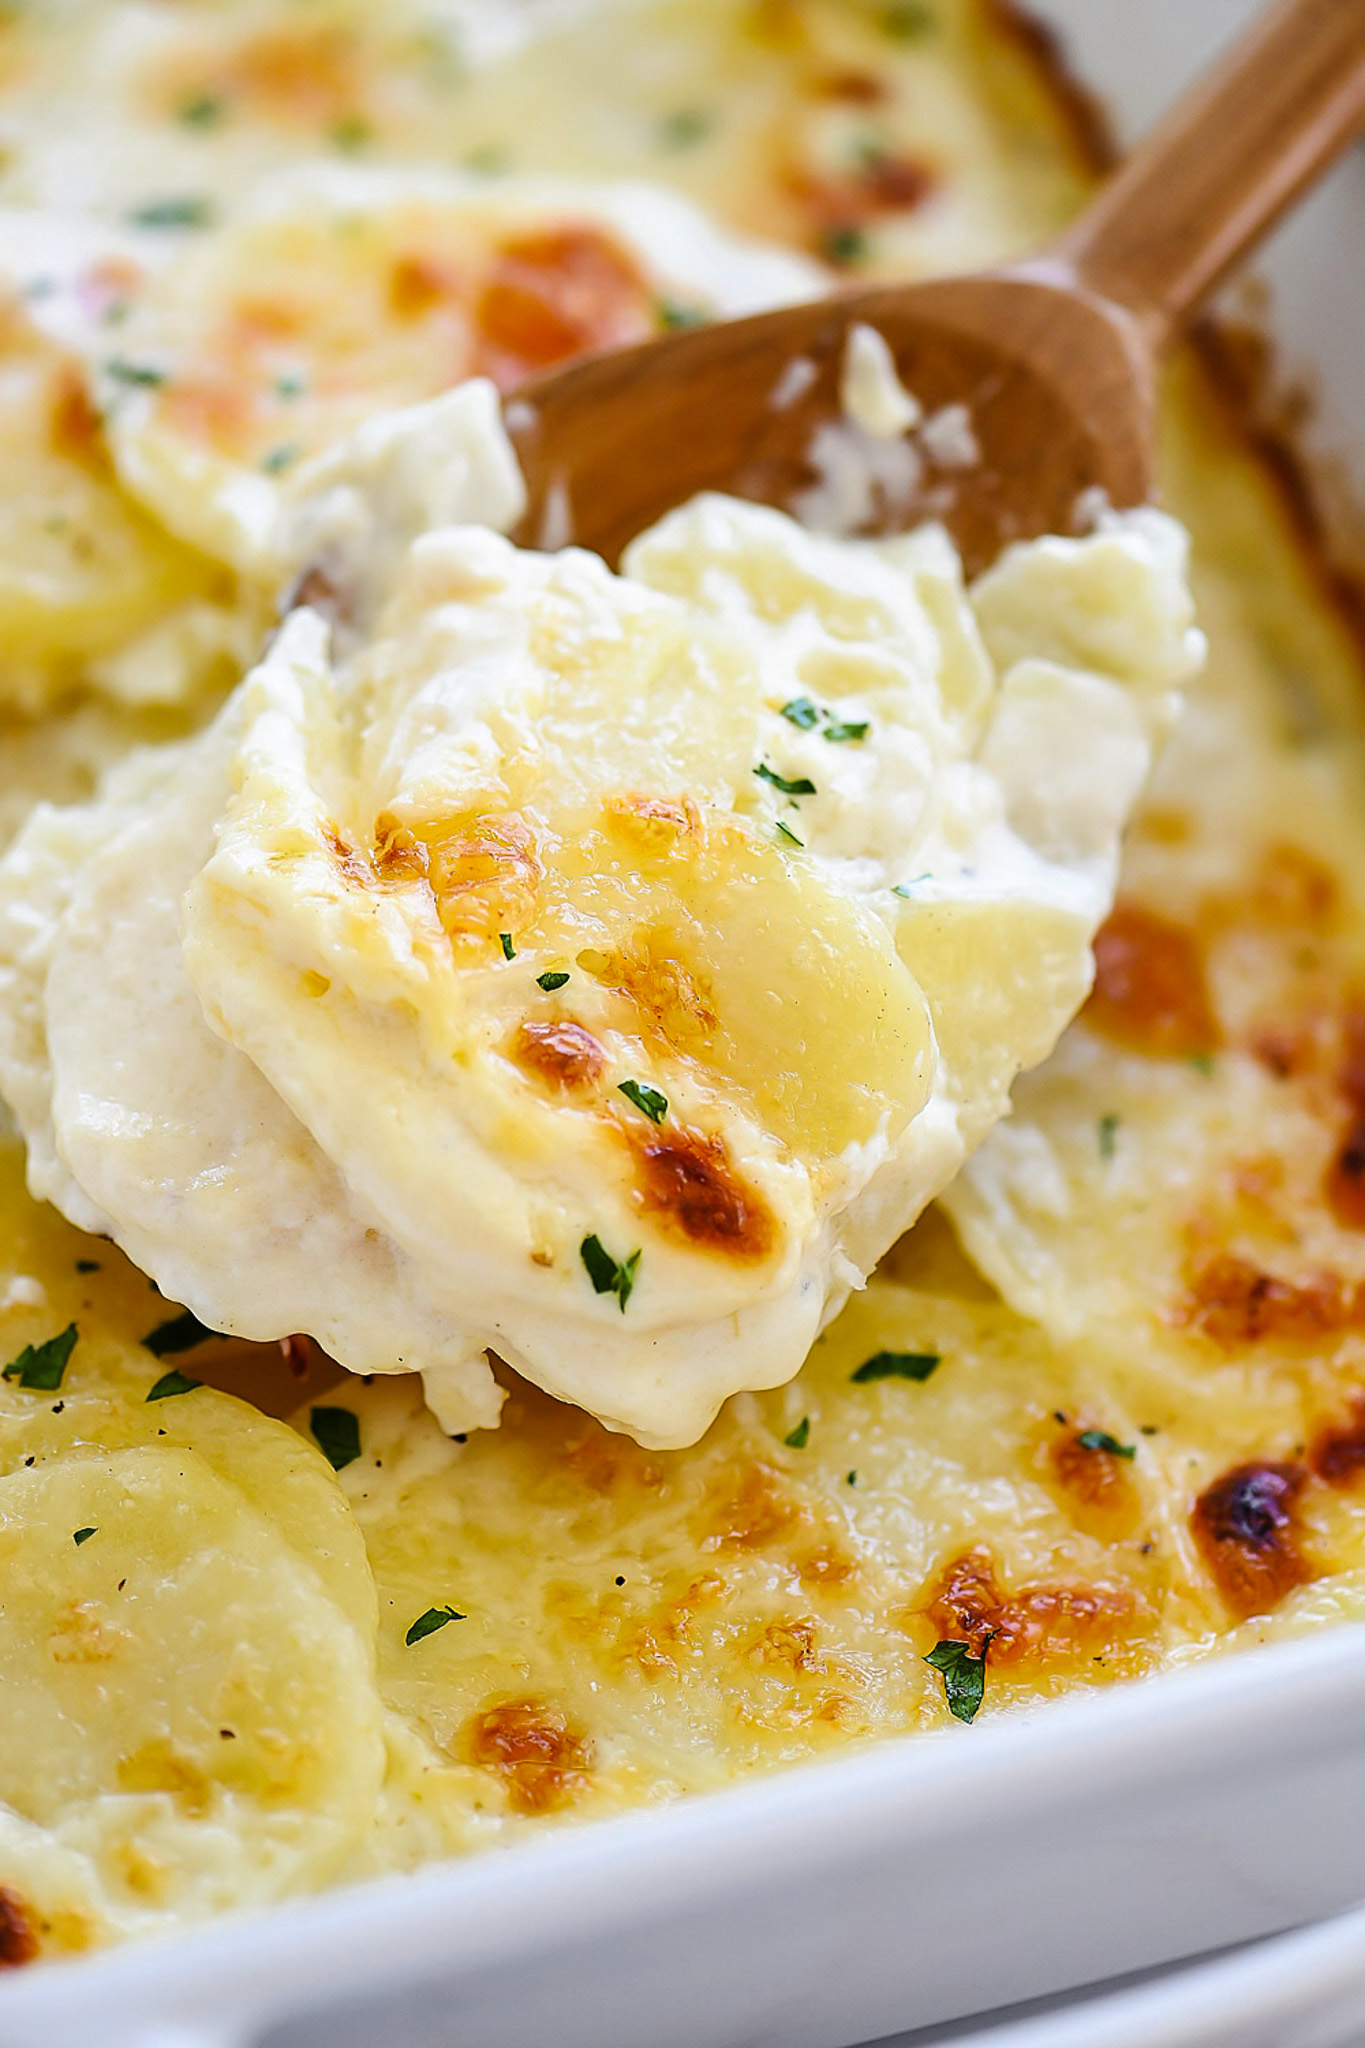 Parmesan Scalloped Potatoes with garlic